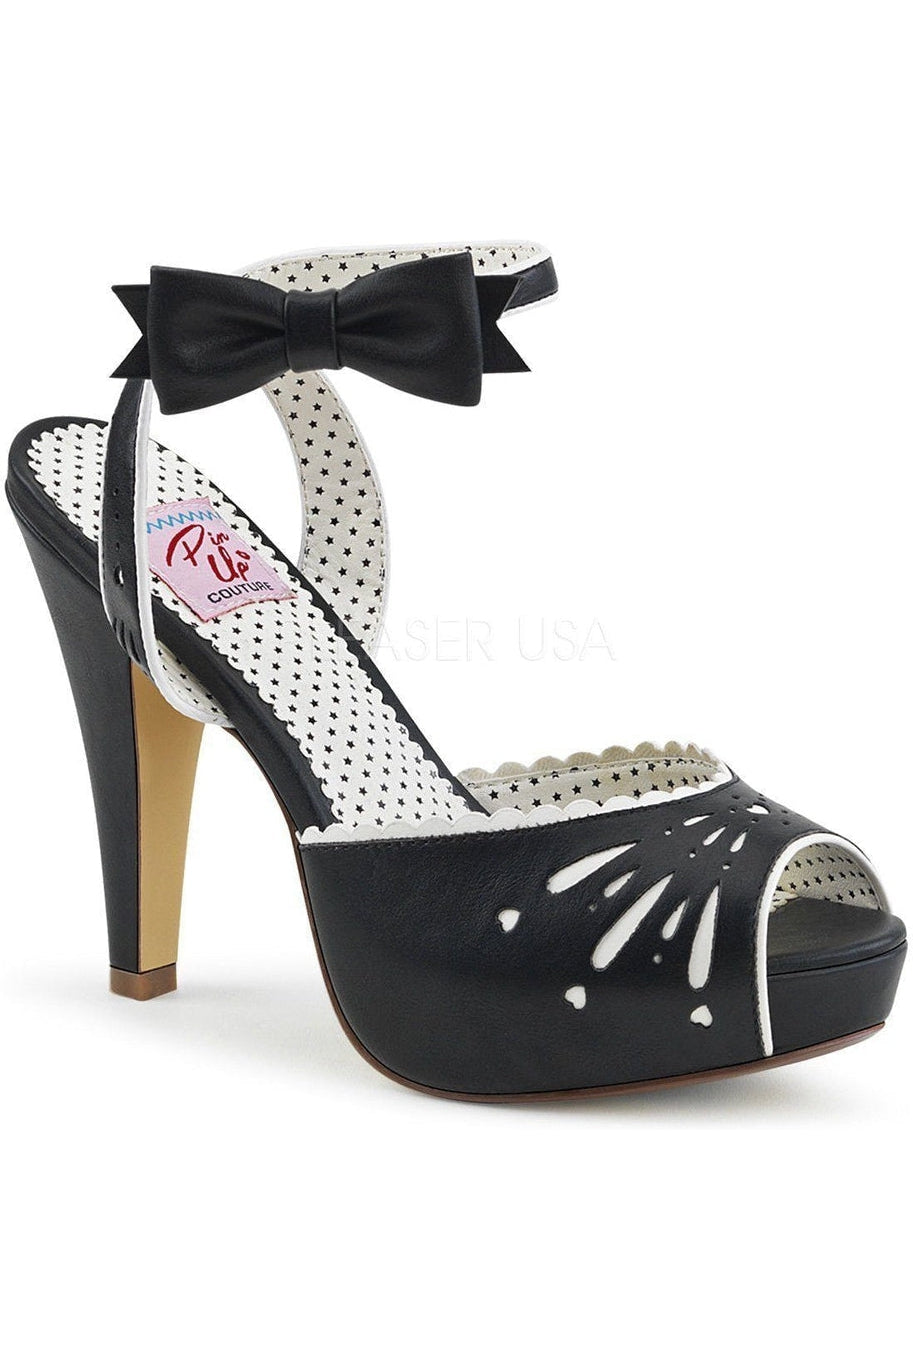 BETTIE-01 Sandal | Black Faux Leather-Pin Up Couture-Black-Sandals-SEXYSHOES.COM